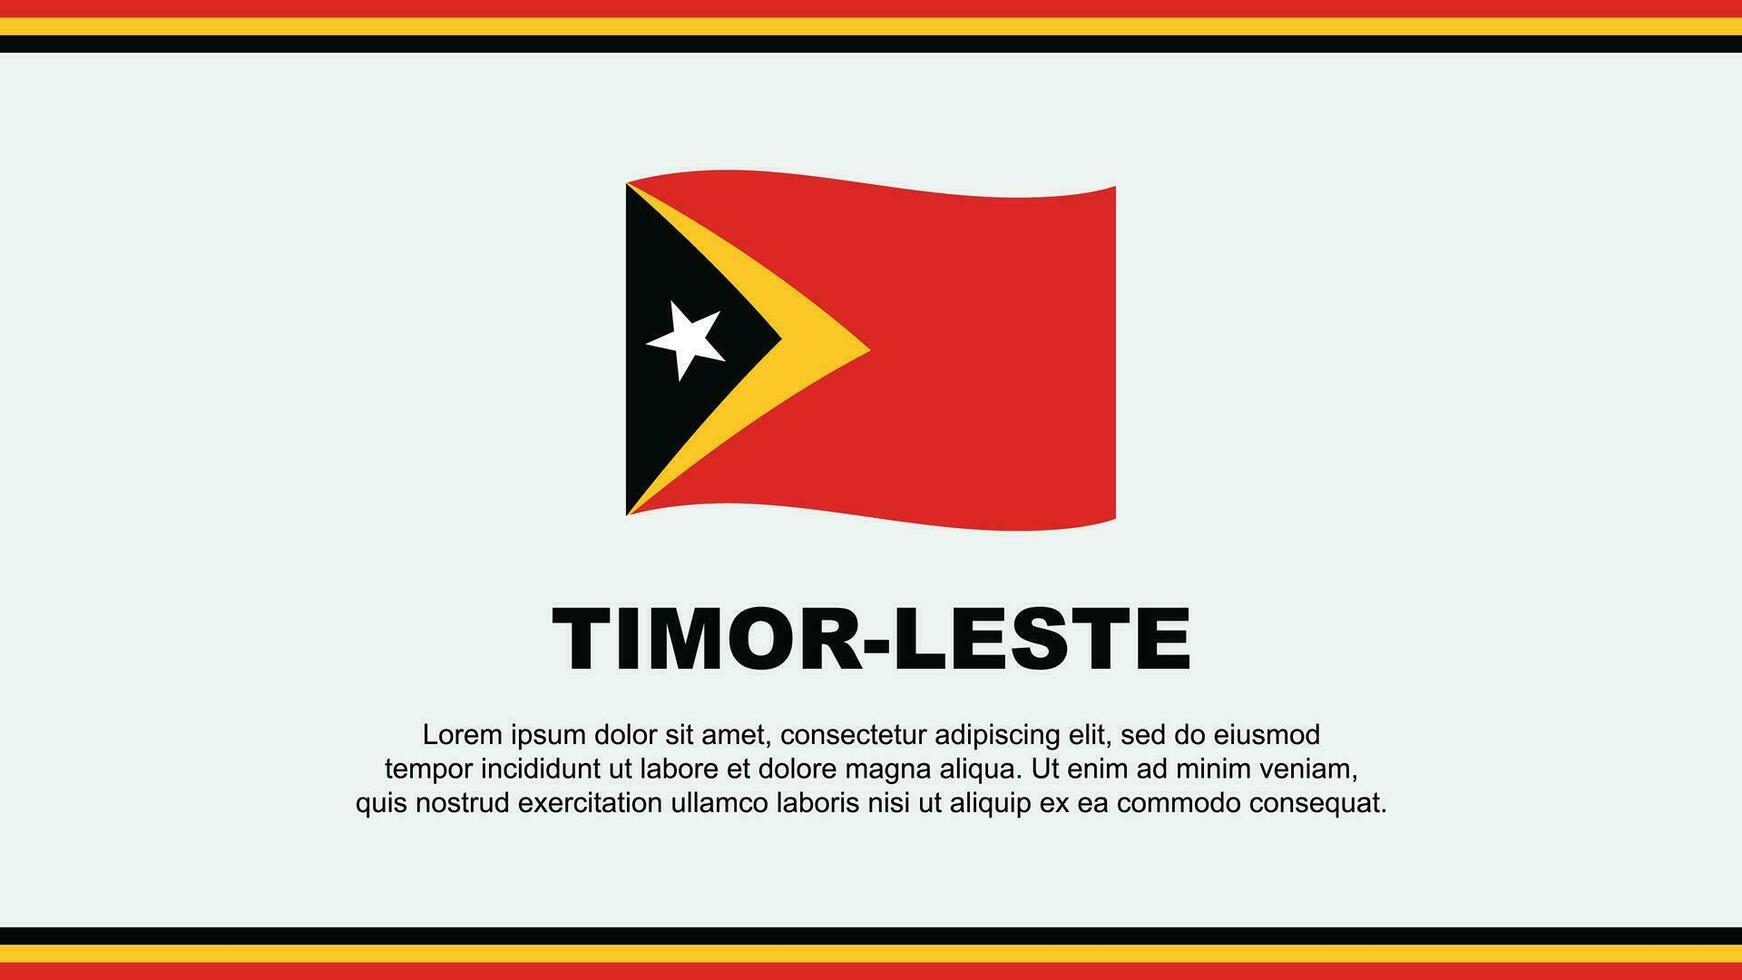 Timor Leste Flag Abstract Background Design Template. Timor Leste Independence Day Banner Social Media Vector Illustration. Timor Leste Design